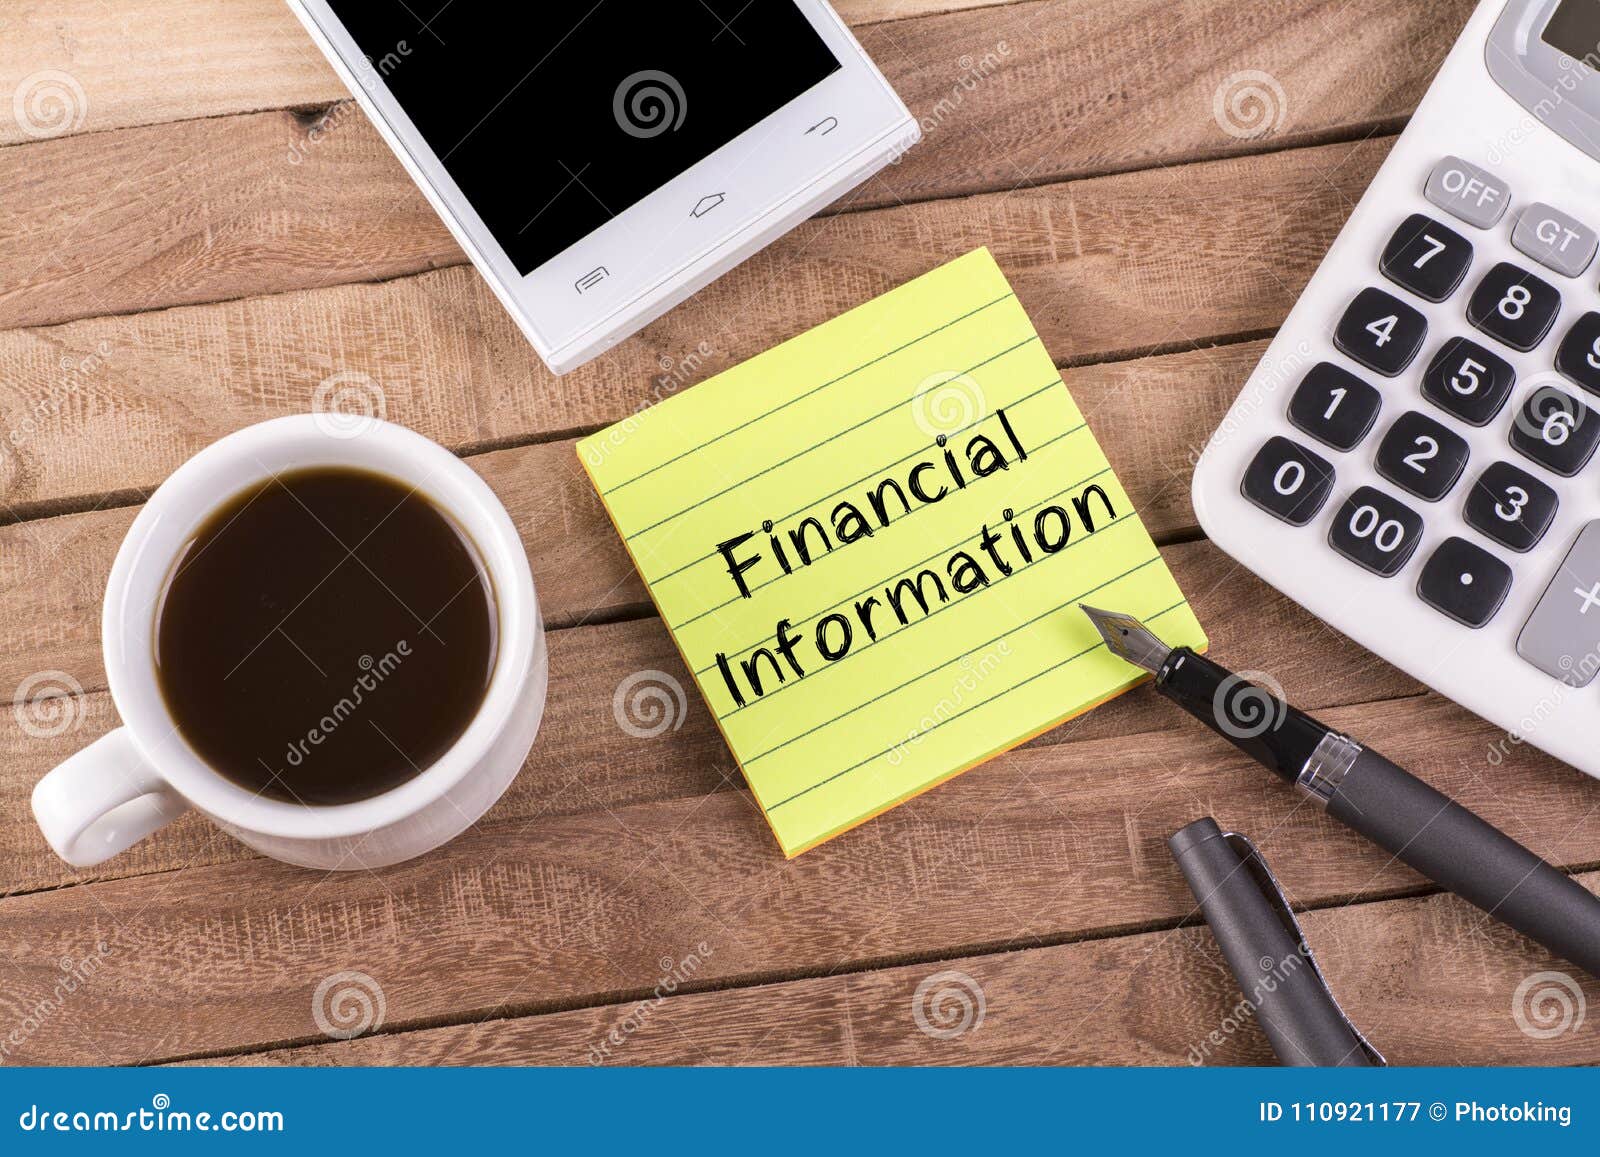 financial information on memo